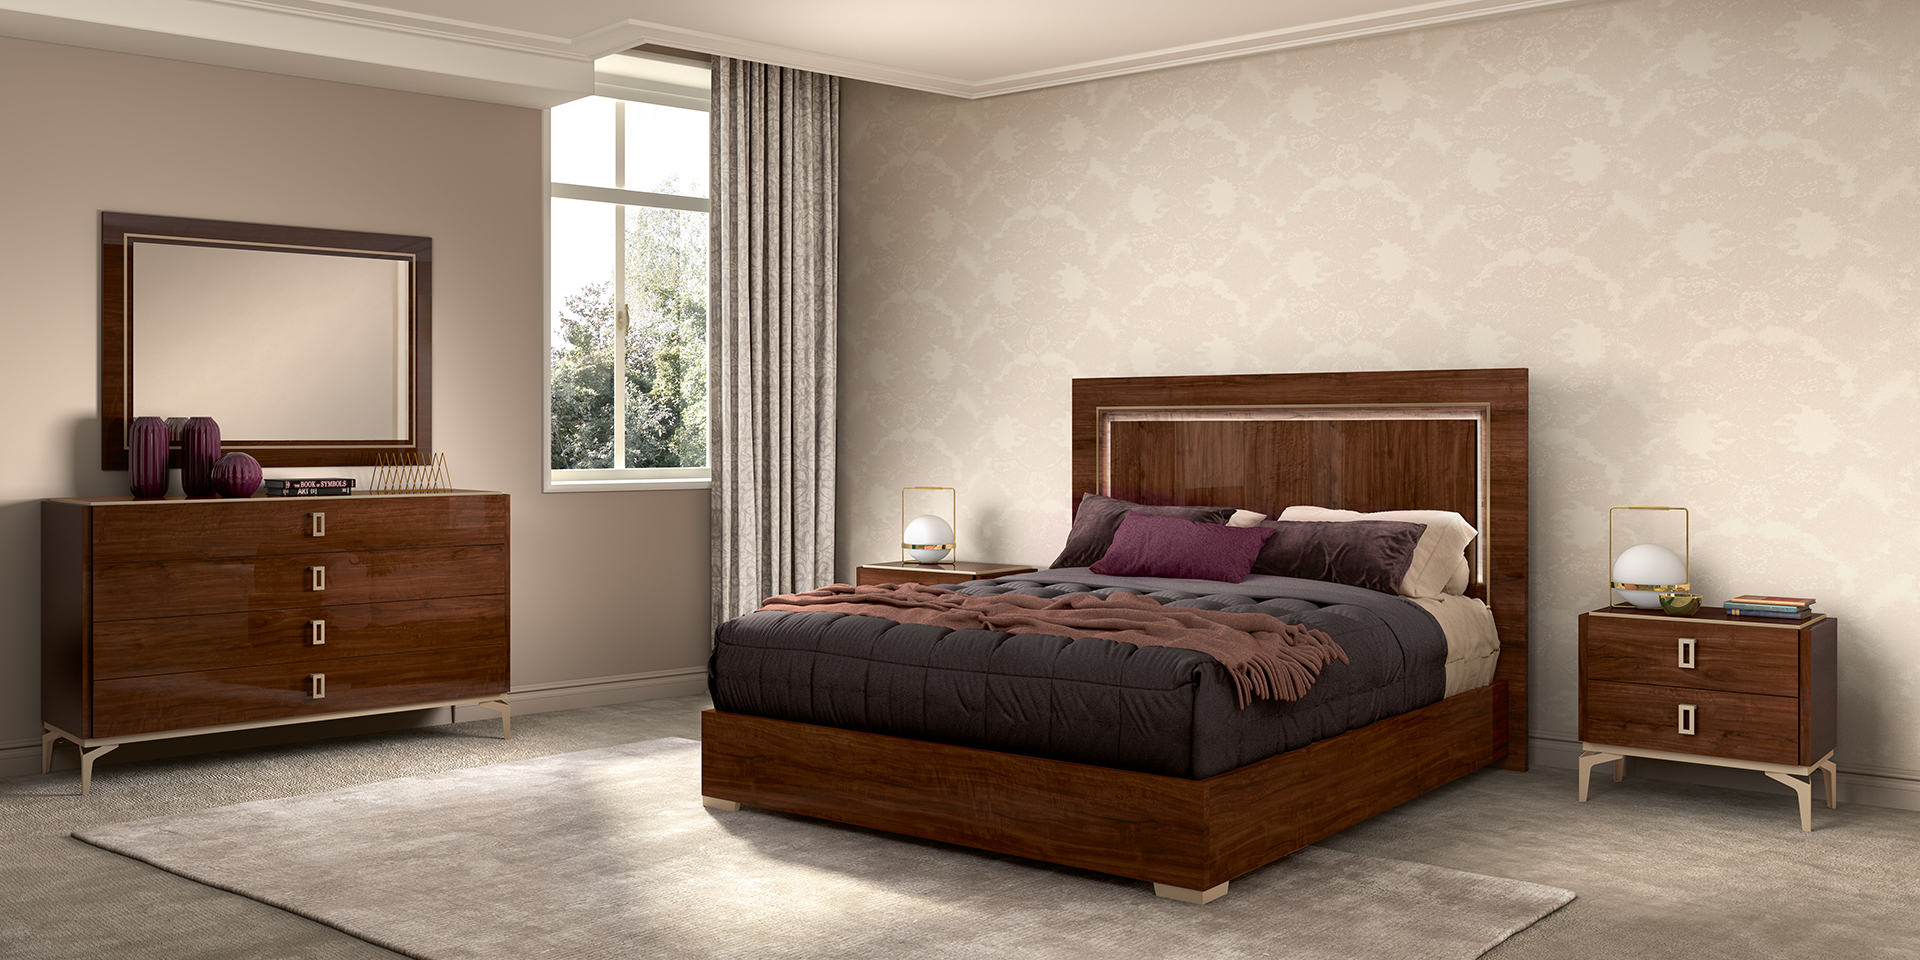 Bedroom Furniture Mattresses, Wooden Frames Eva Bedroom Additional items